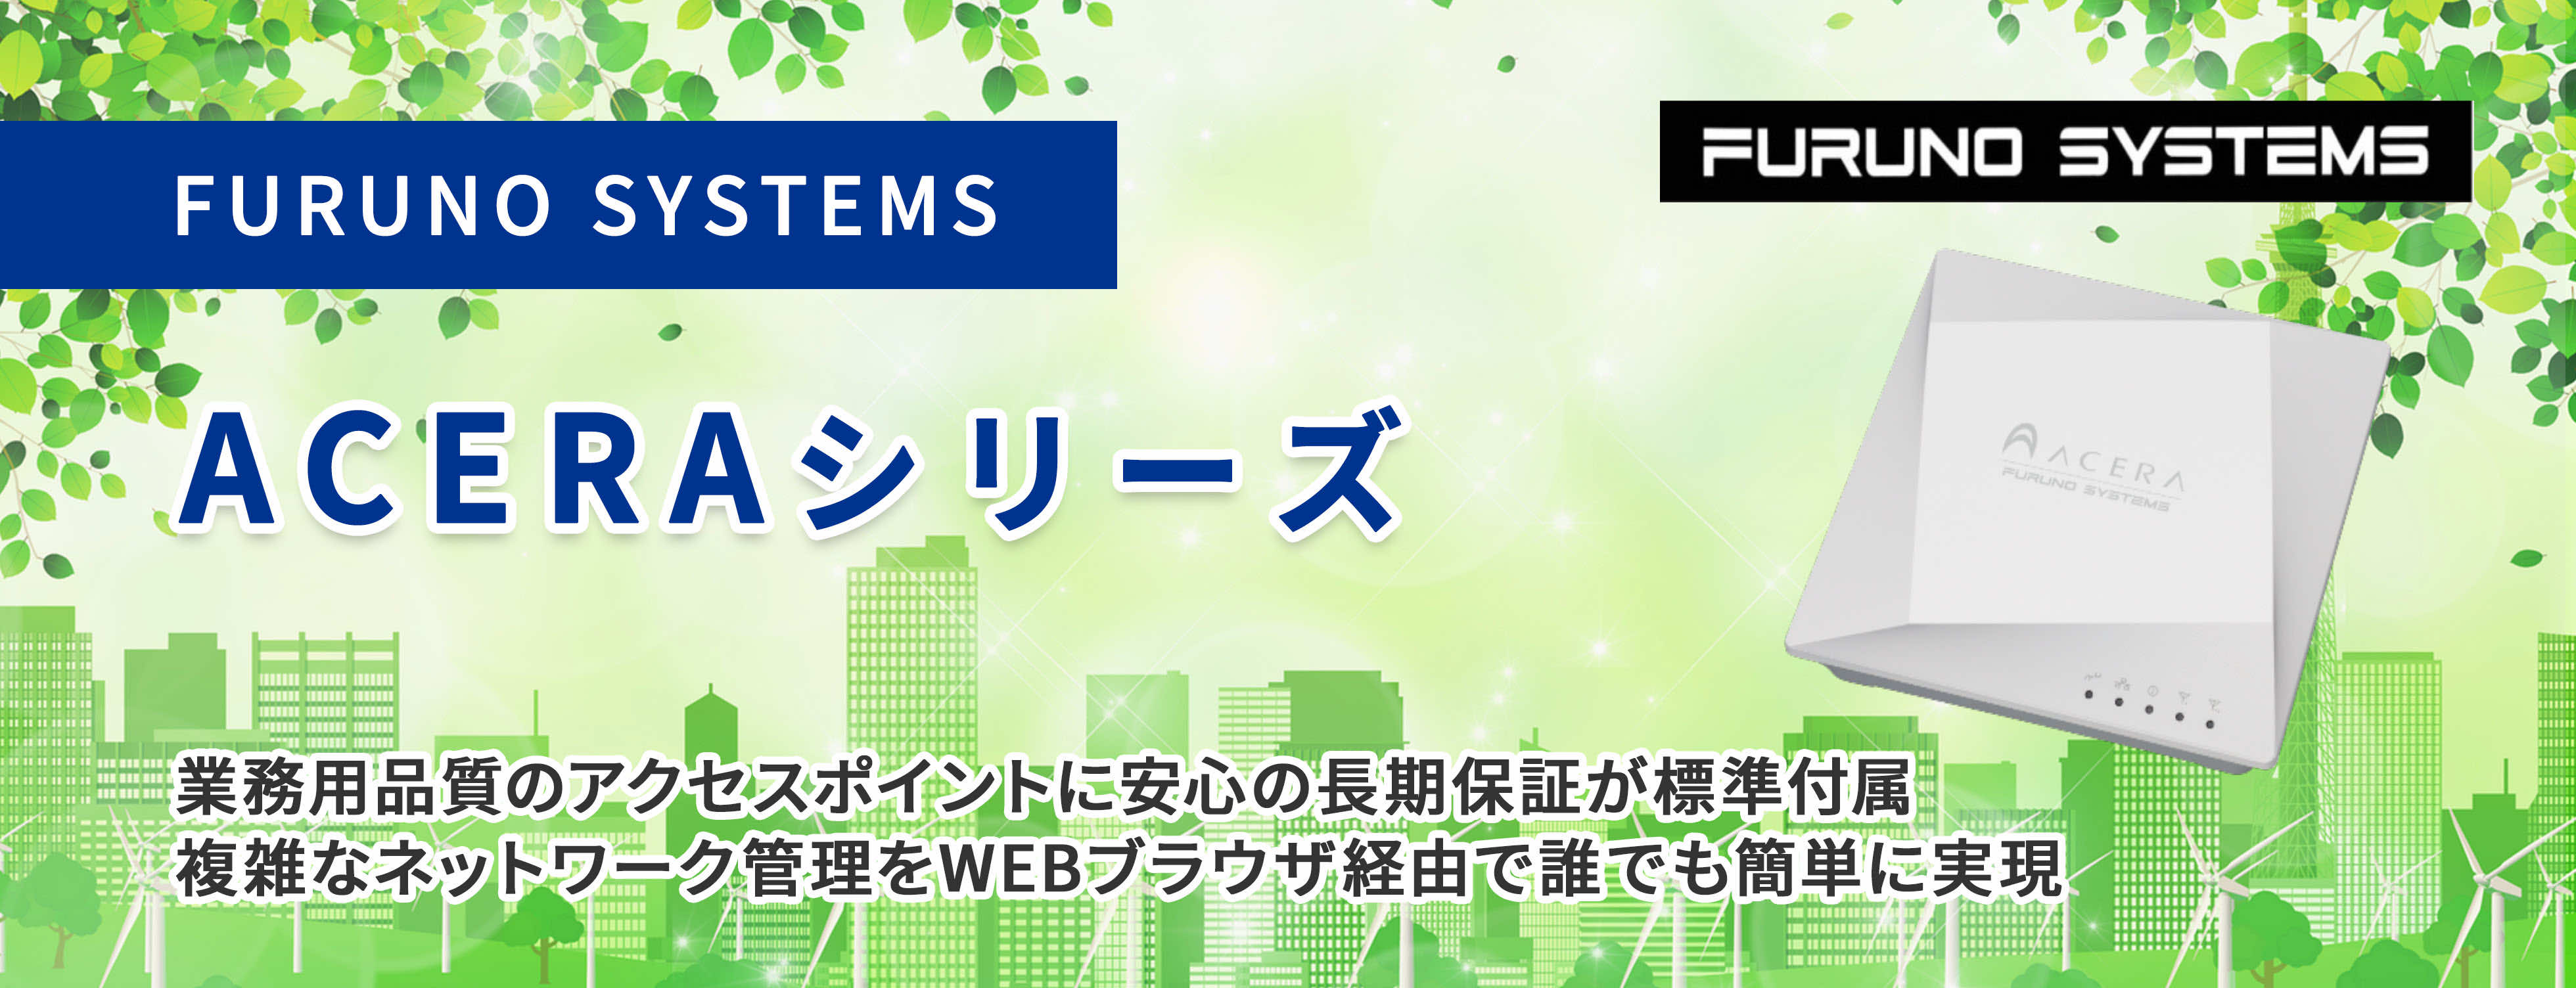 FURUNO SYSTEMS ACERAシリーズ